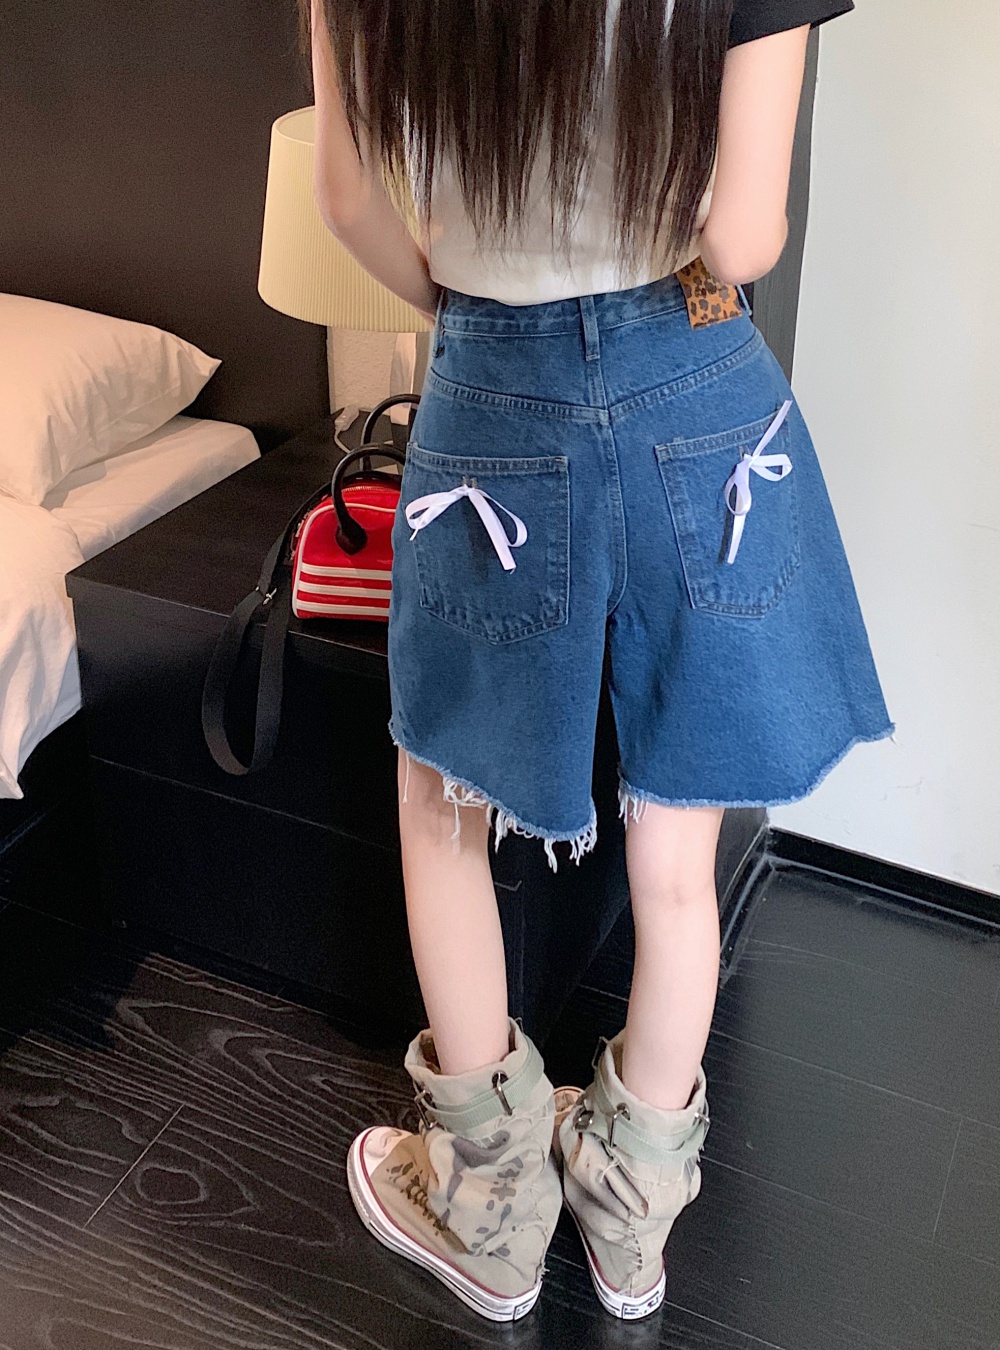 Loose slim five pants Korean style bow short jeans for women